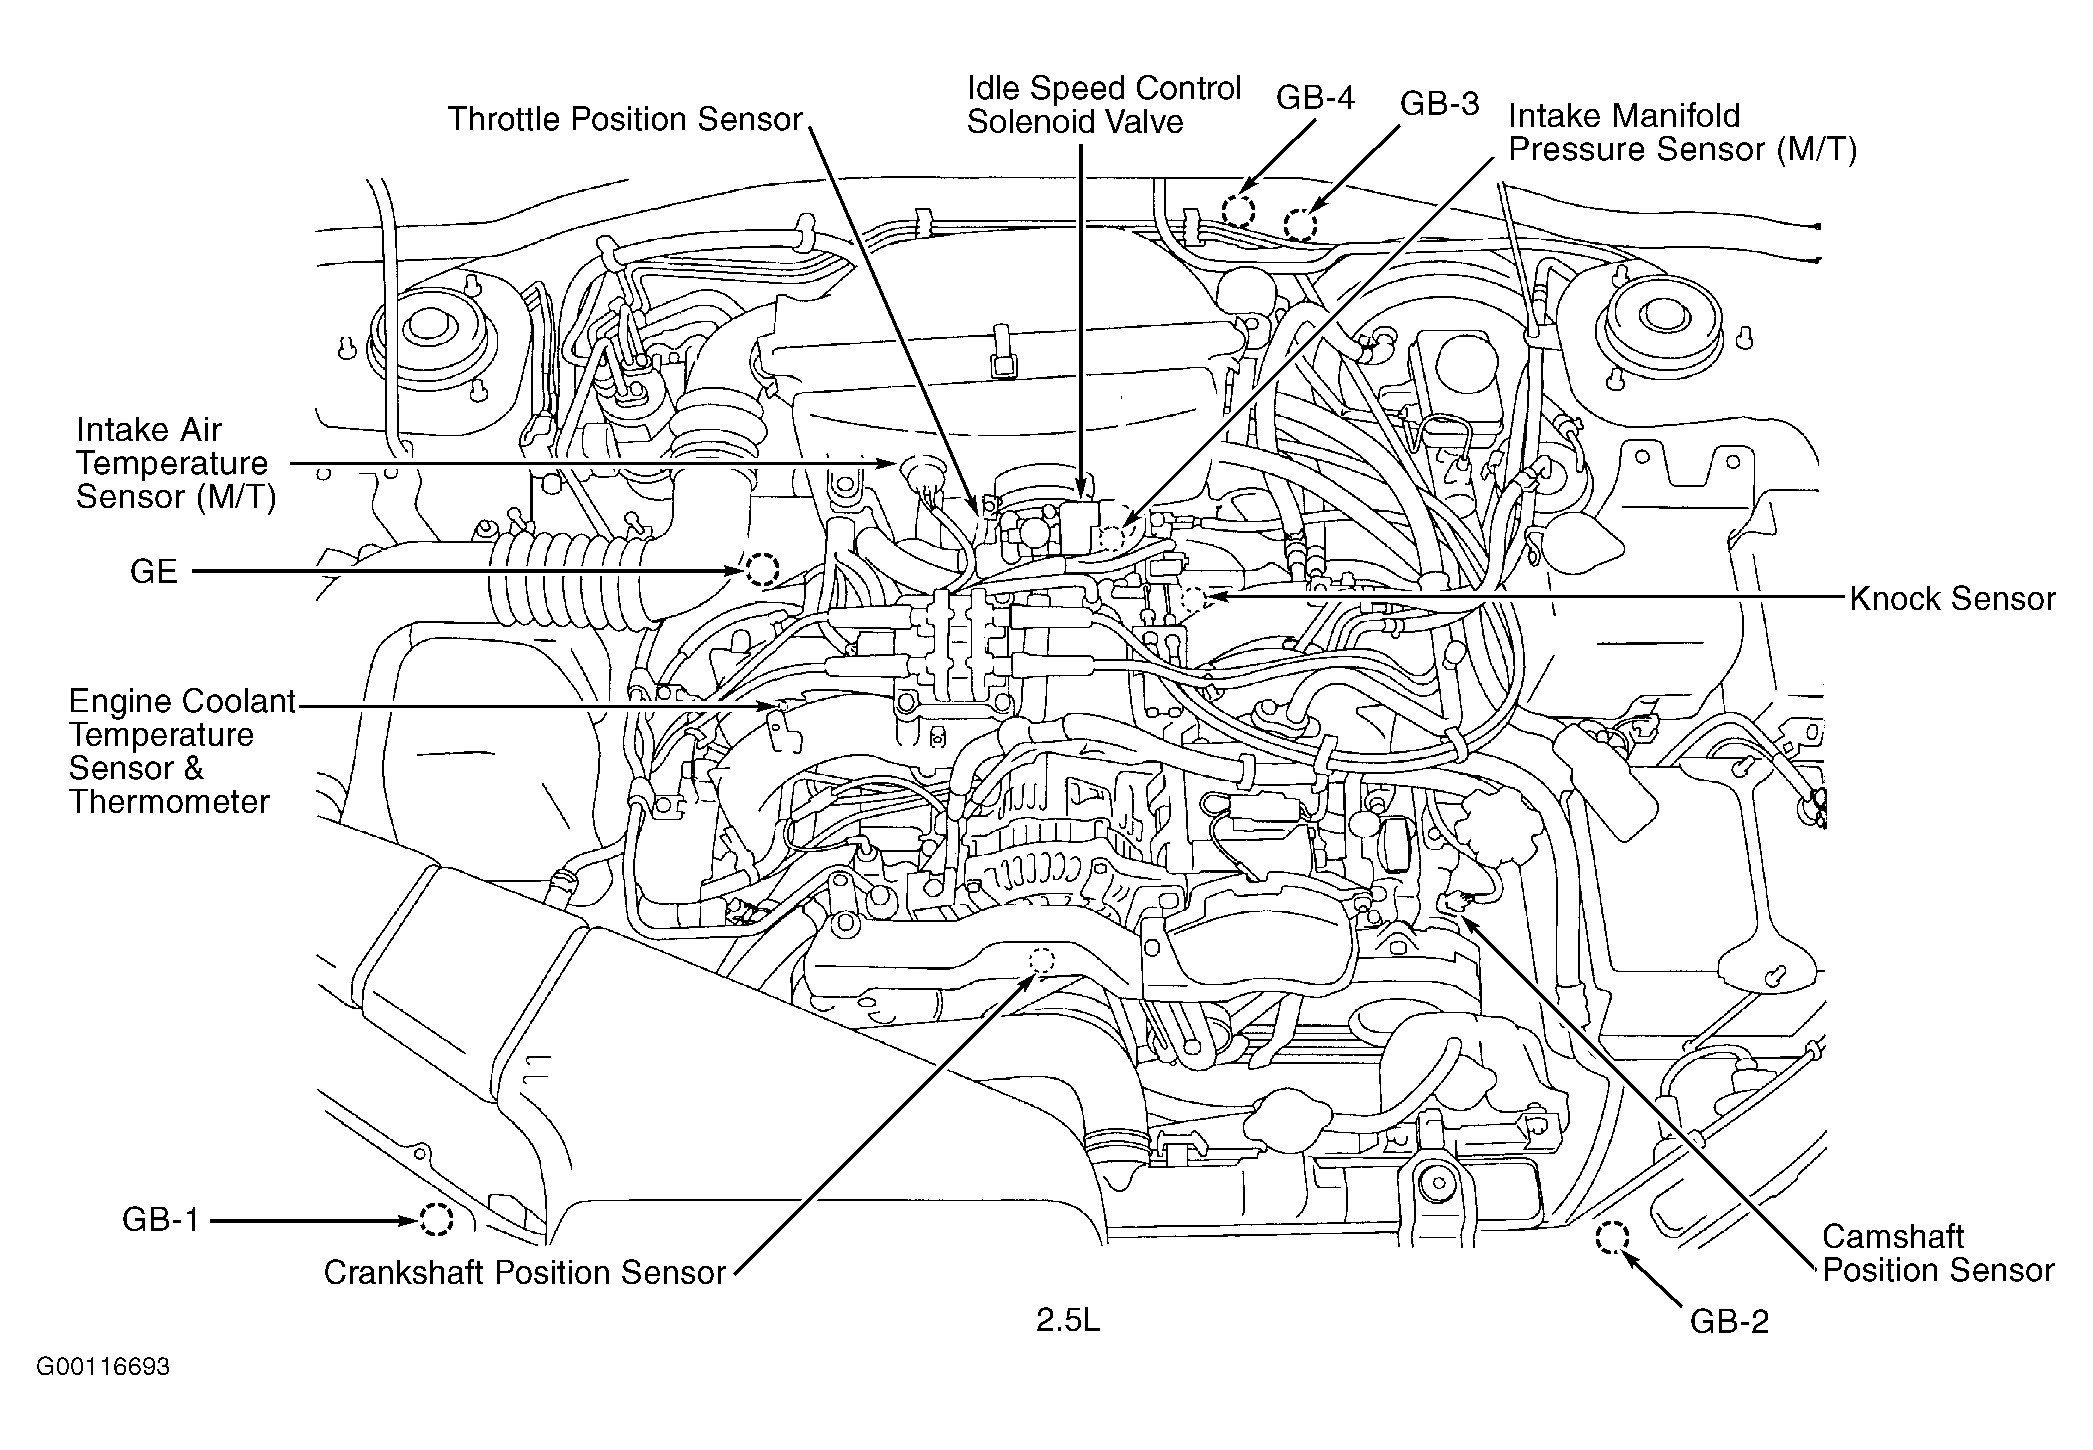 2007 Subaru forester Engine Diagram 2000 Subaru Legacy Wiring Diagram Of 2007 Subaru forester Engine Diagram